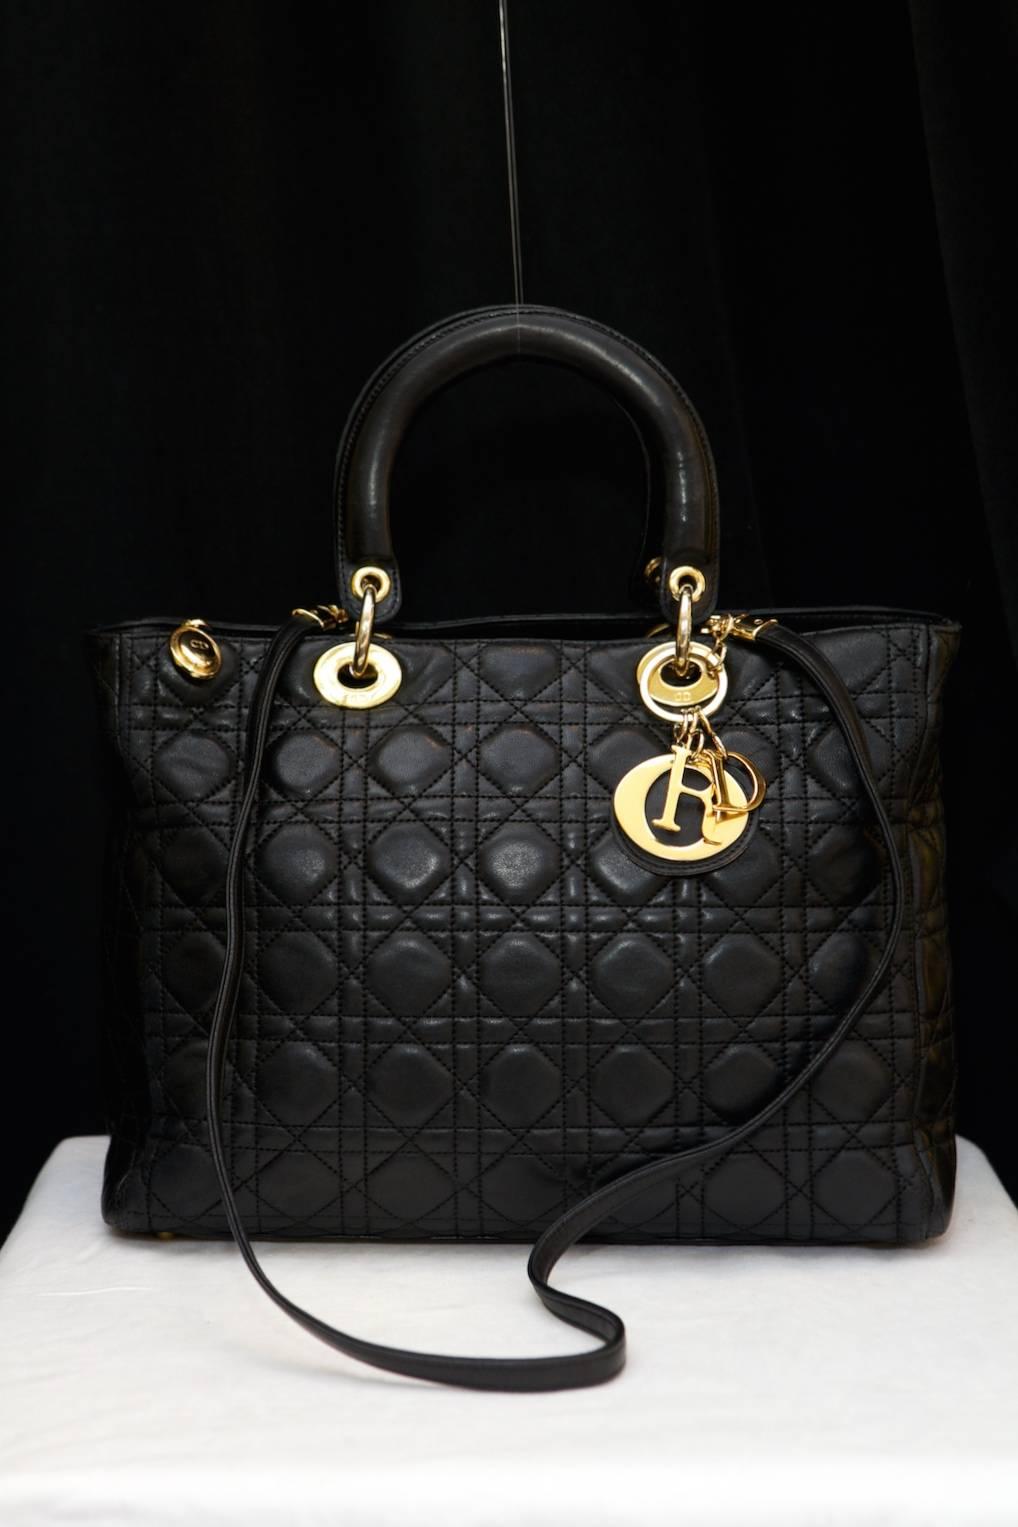 CHRISTIAN DIOR (Paris) Handbag model Large Lady Dior bag in iconic 